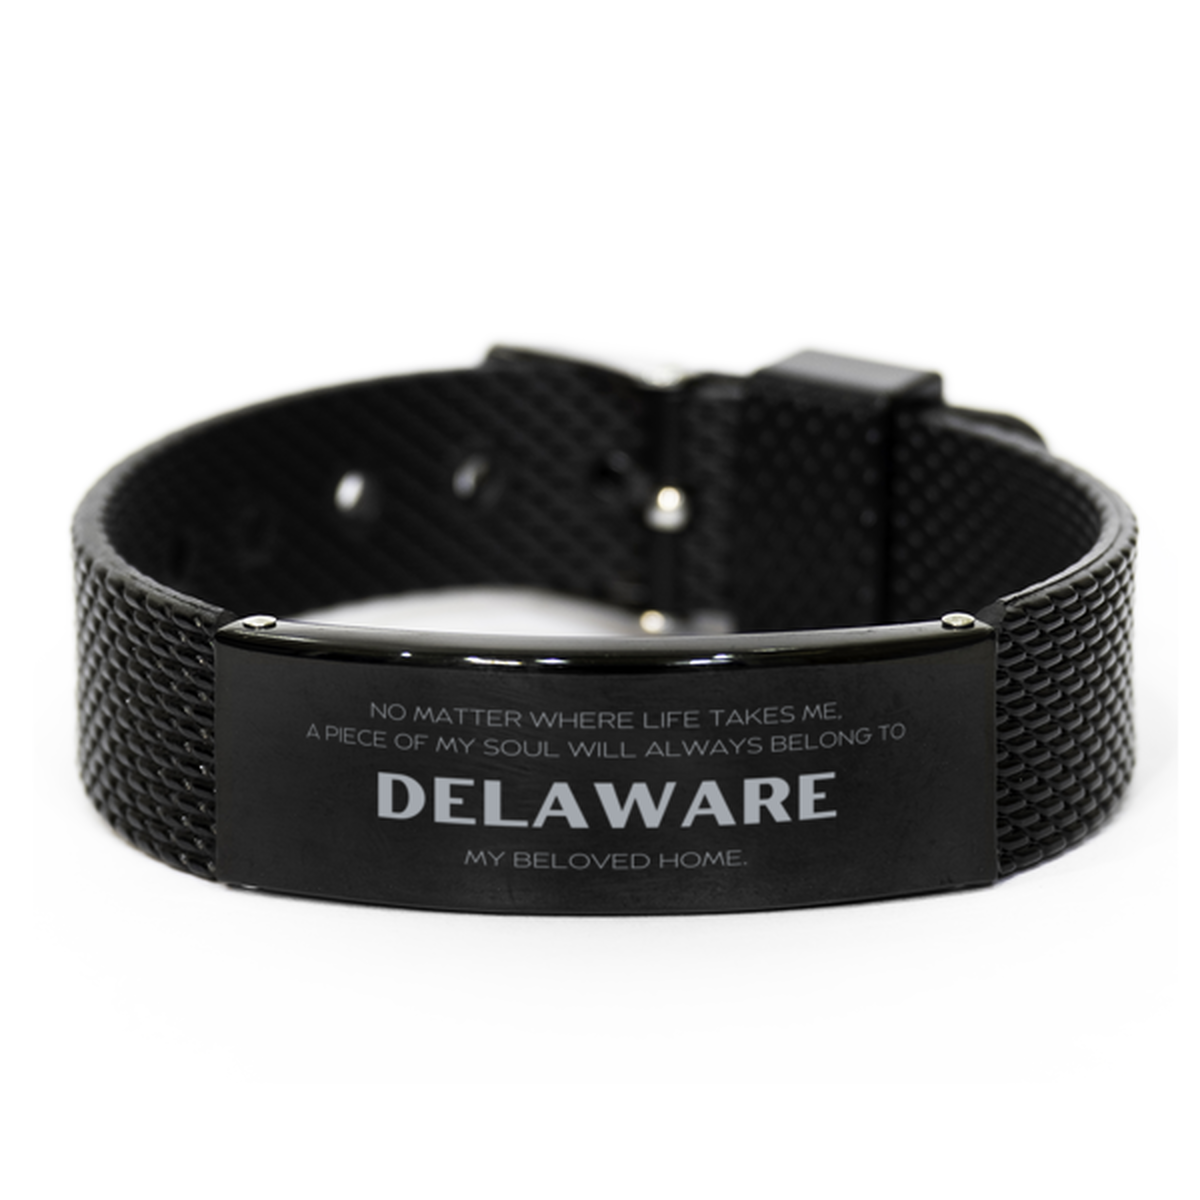 Love Delaware State Gifts, My soul will always belong to Delaware, Proud Black Shark Mesh Bracelet, Birthday Unique Gifts For Delaware Men, Women, Friends